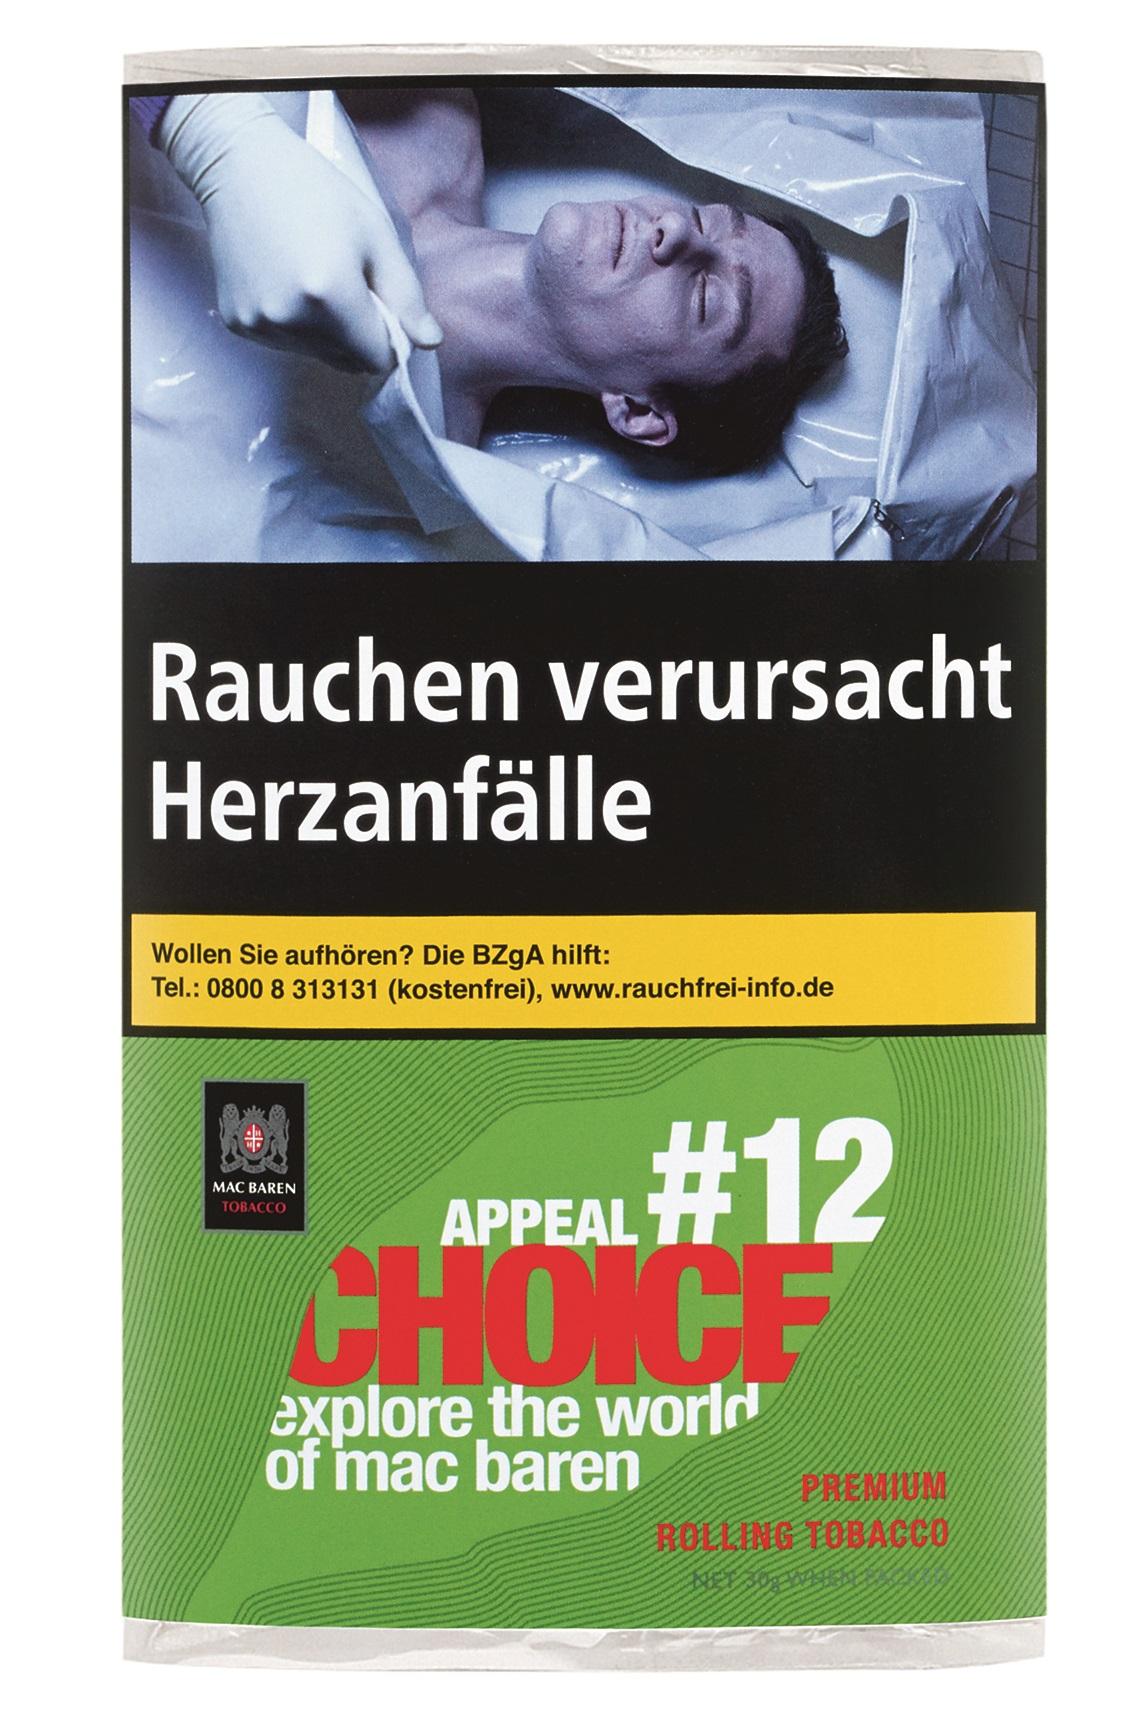 Mac Baren Zigarettentabak Appeal Choice 1 Packung